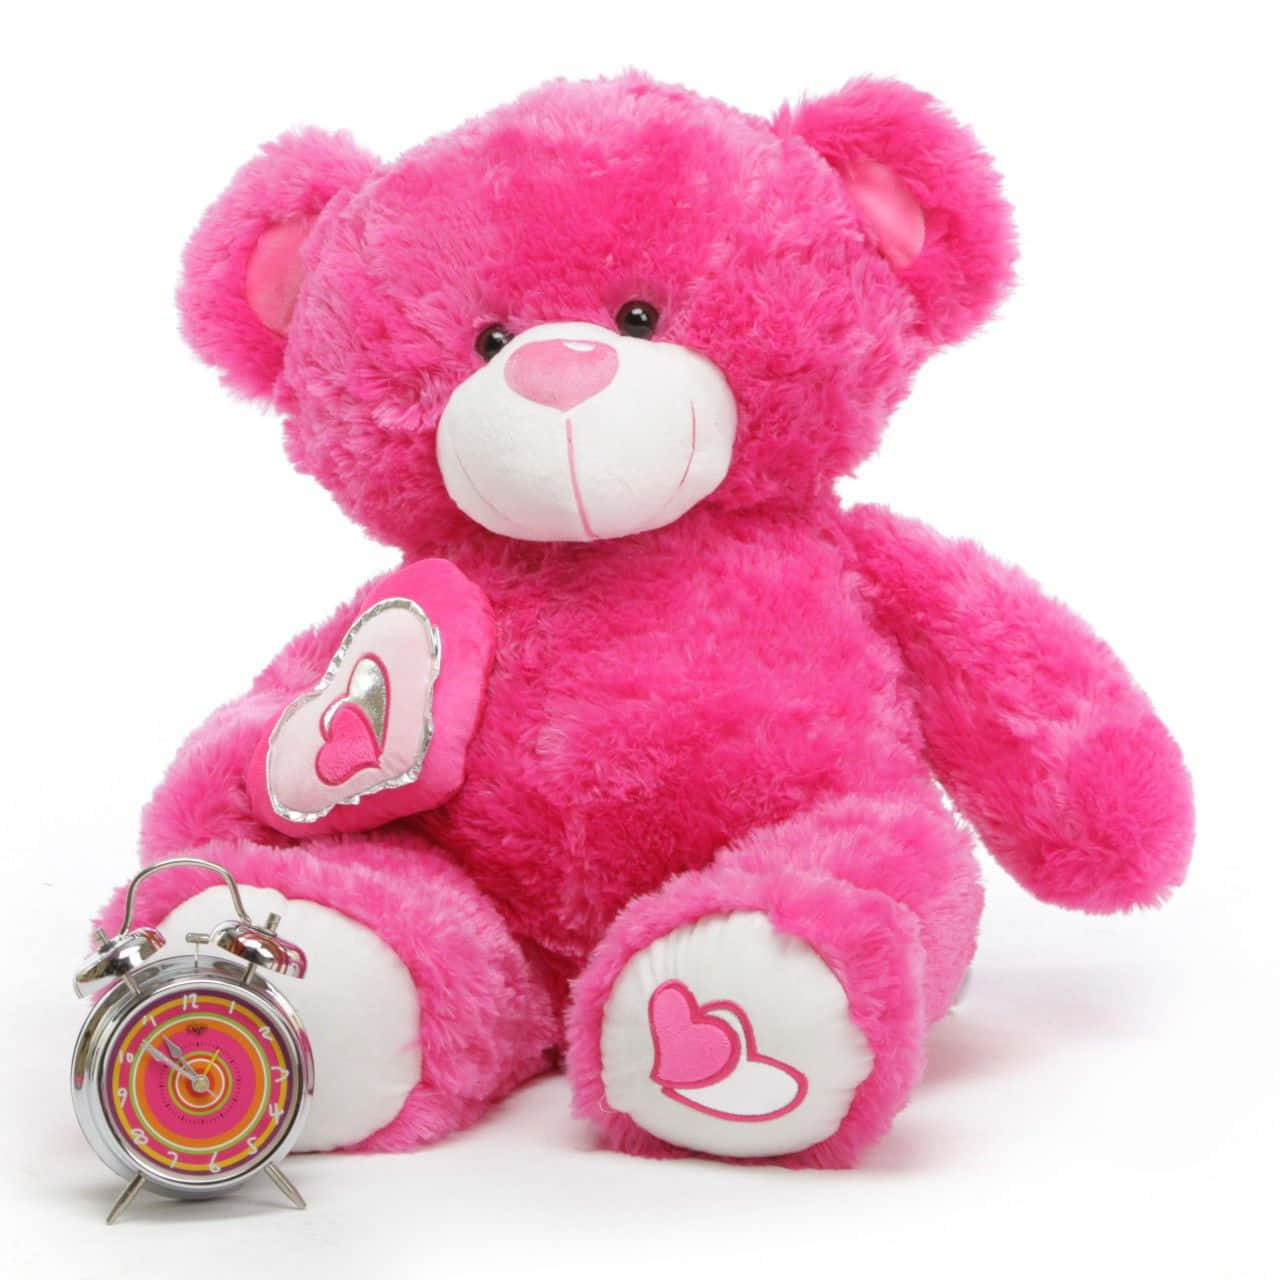 Cute Pink Teddy Bear Alarm Clock